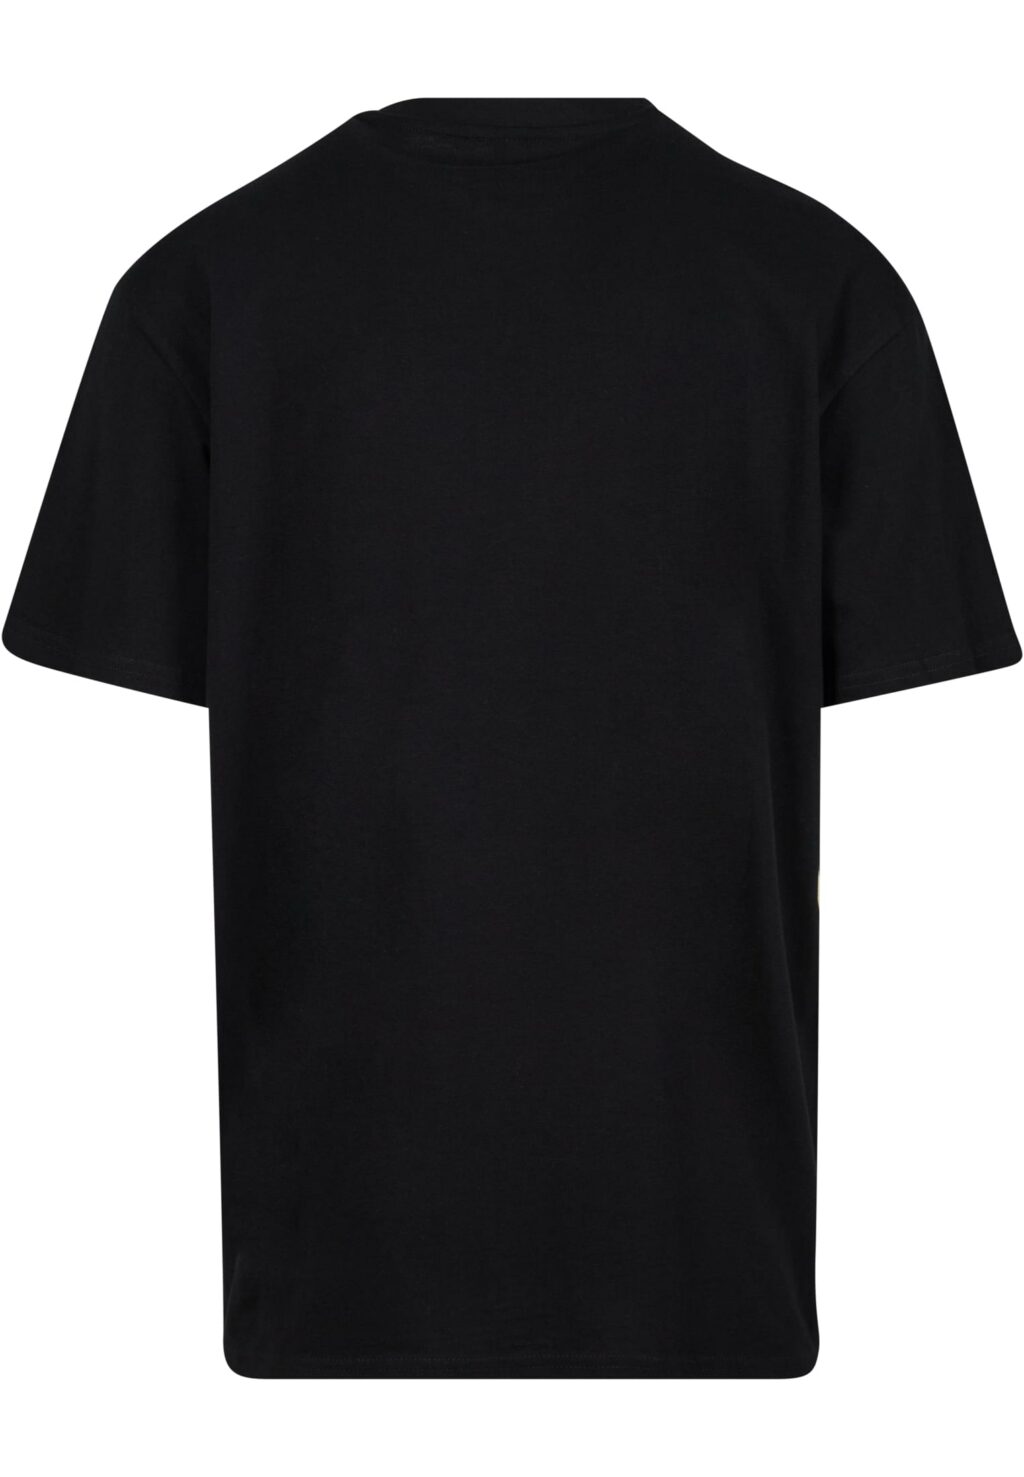 Rocawear T-Shirt black/white RWTS024T